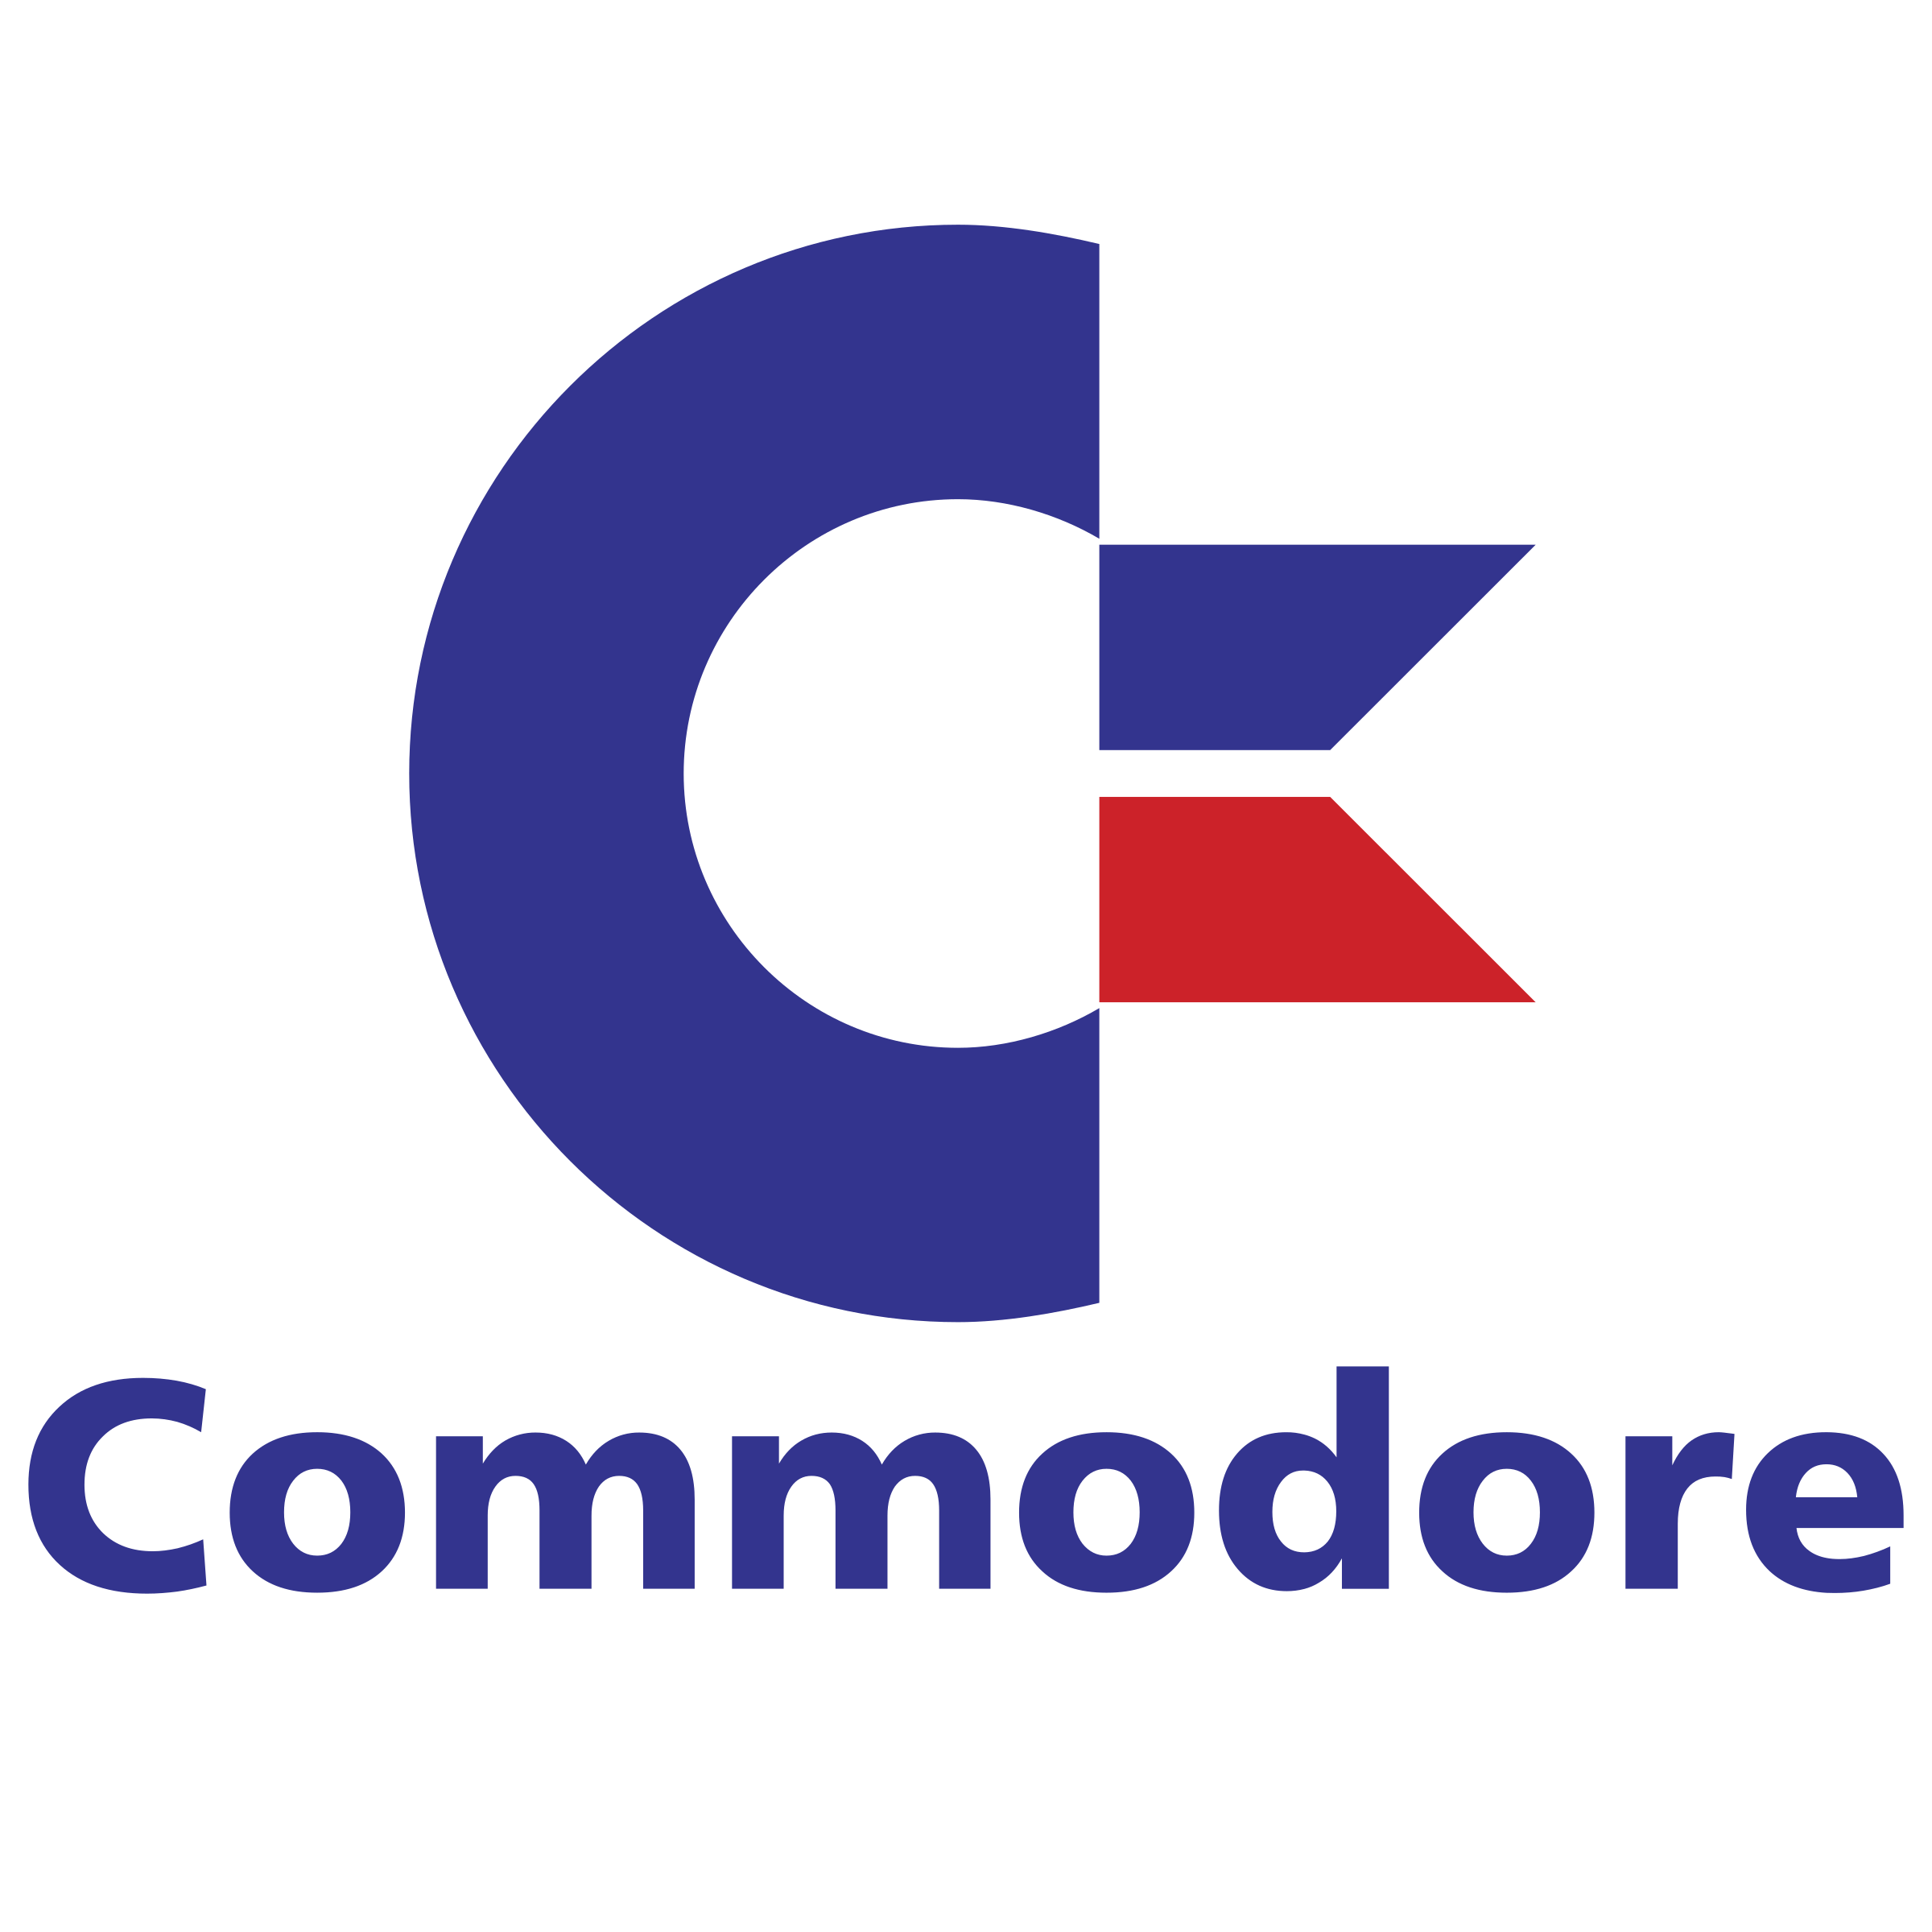 Commodore Logo - Commodore Logo PNG Transparent & SVG Vector - Freebie Supply